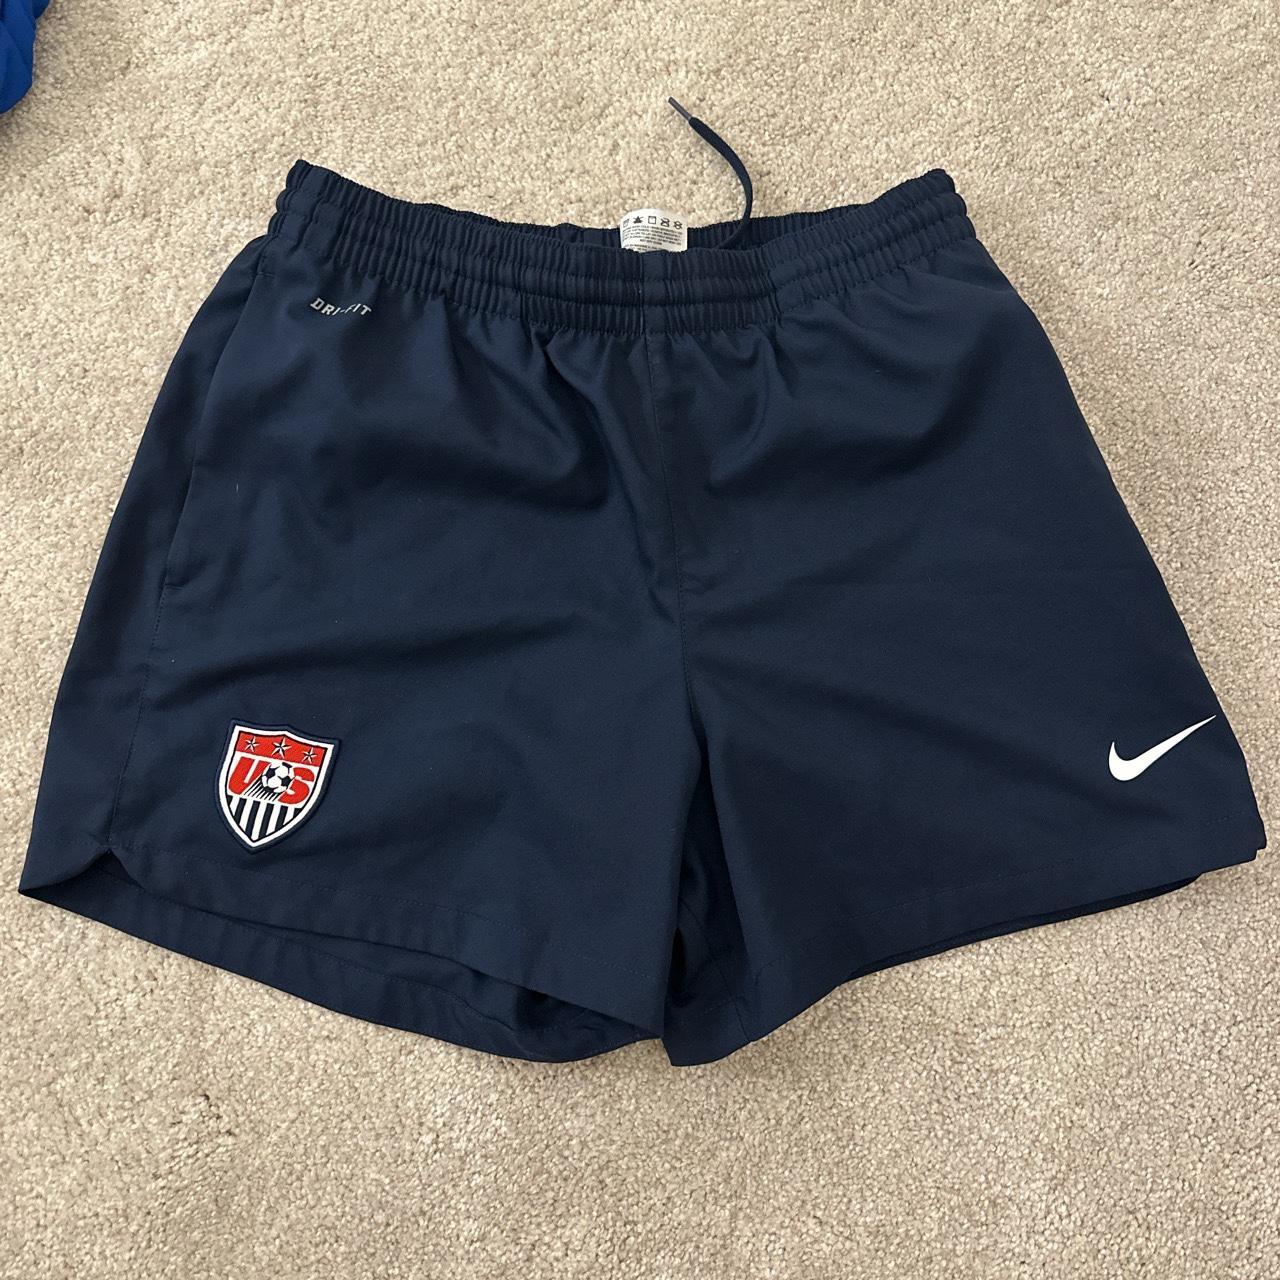 Small navy usa soccer Nike shorts. Could definitely... - Depop